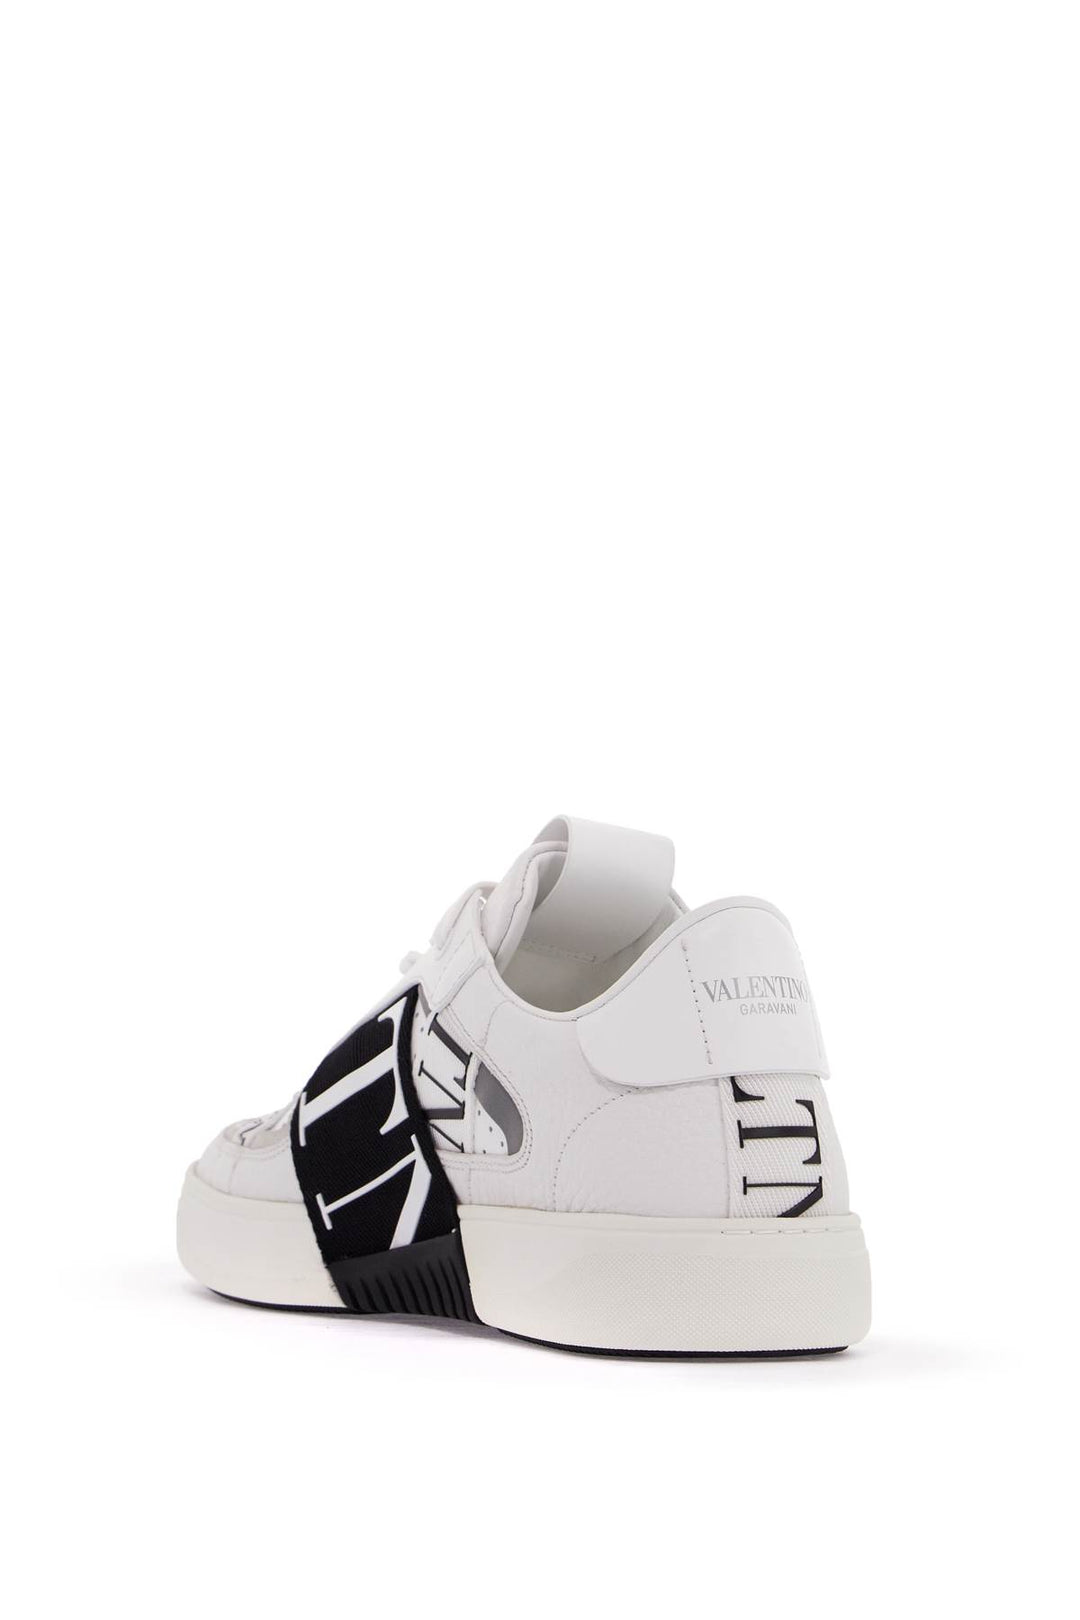 Valentino Garavani Vl7n Low Top Sneakers   White